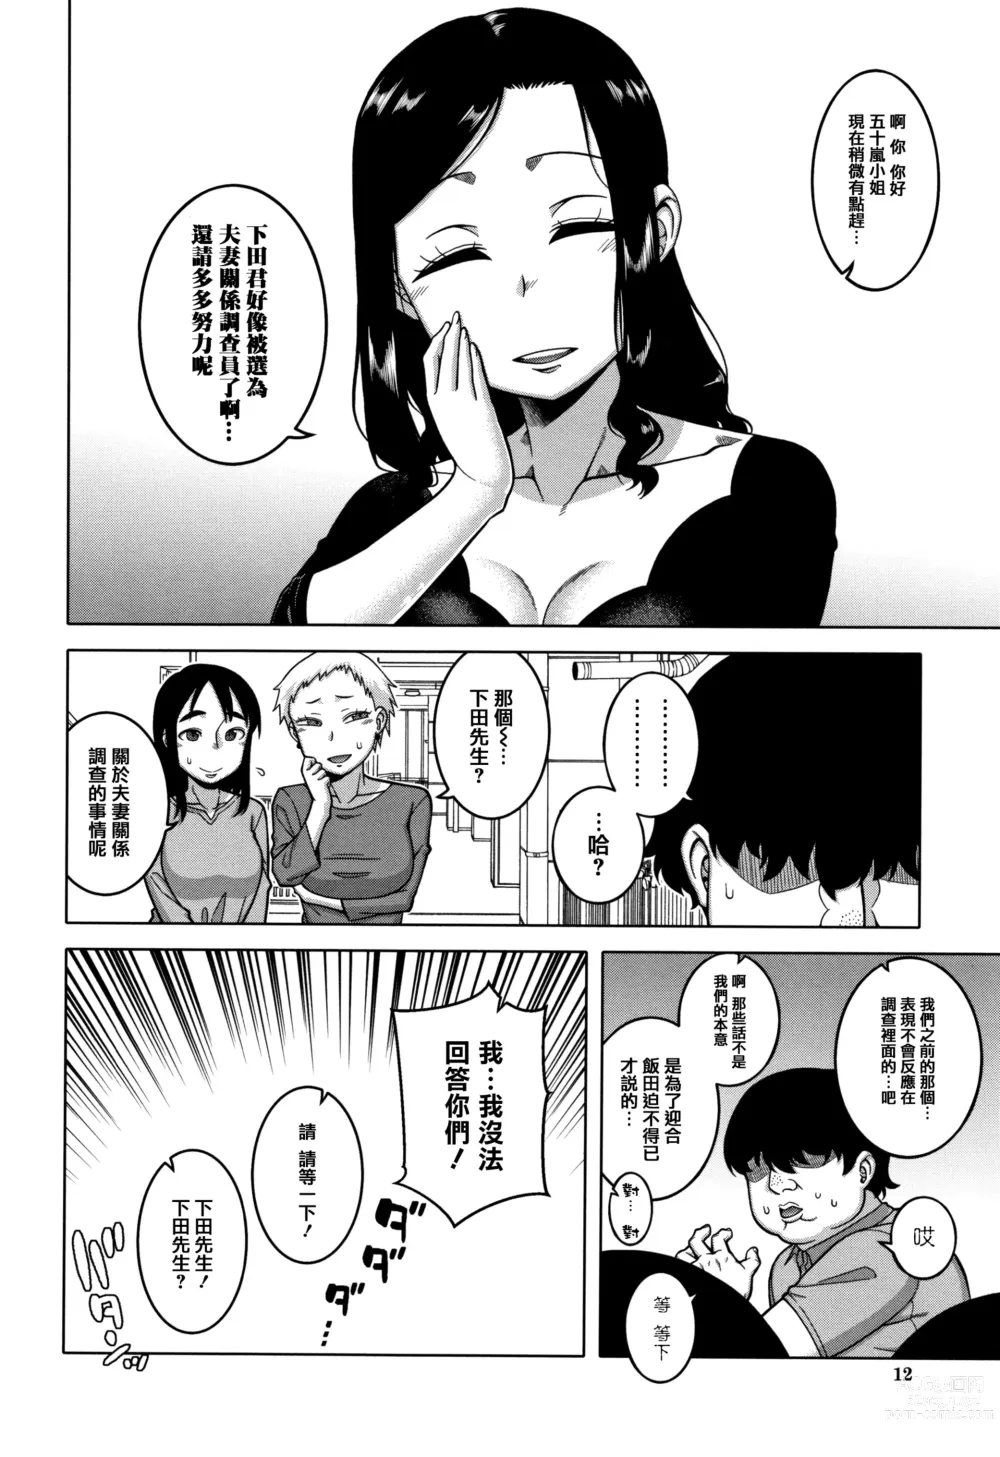 Page 14 of manga 催眠夫婦仲調査